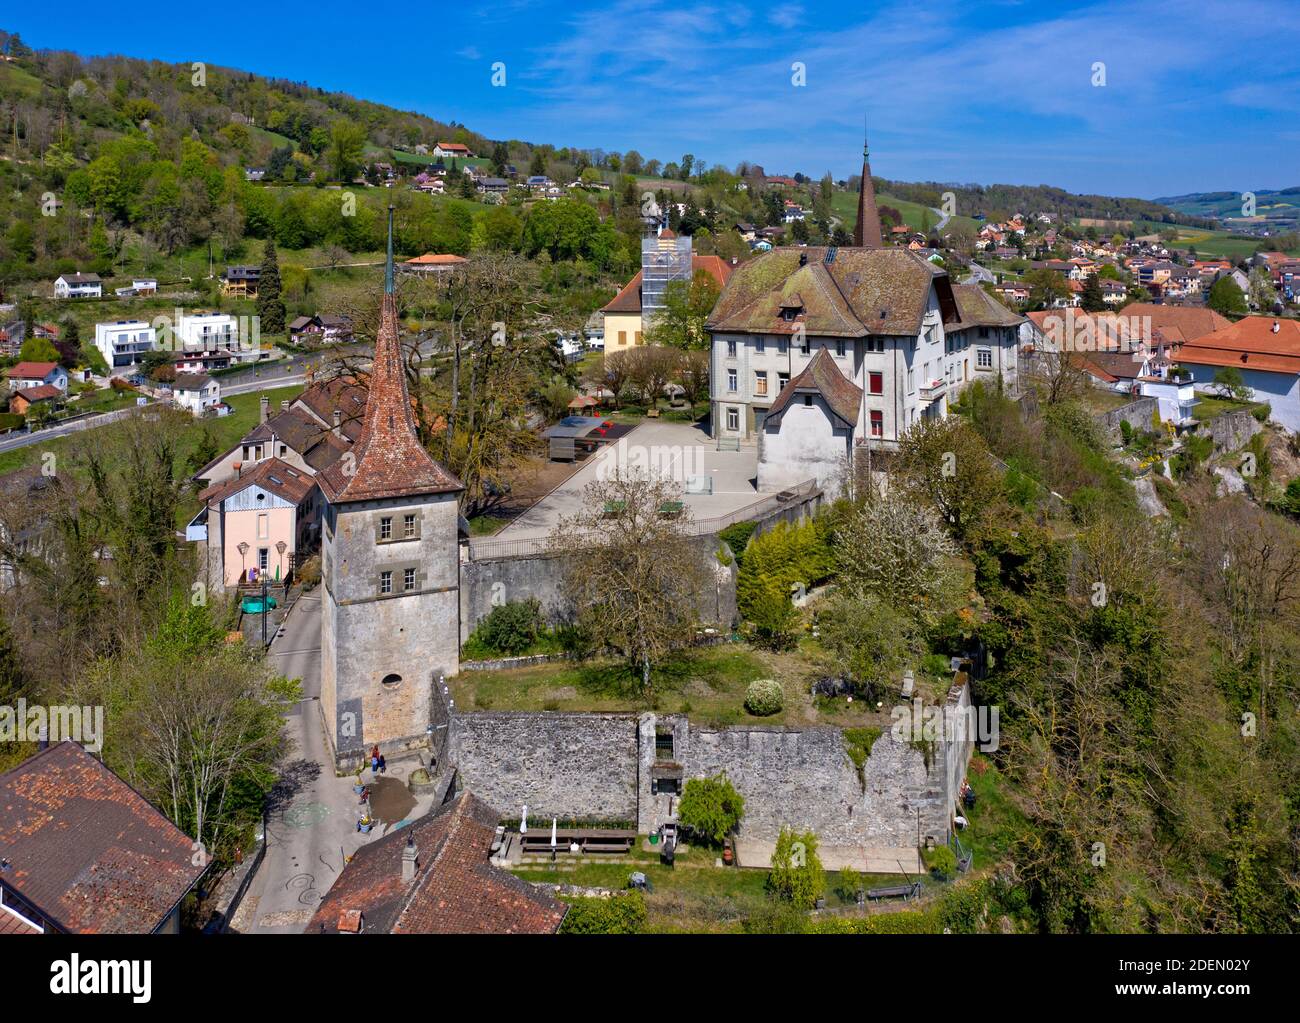 Schloss Carrouge, Chateau de Carrouge, mit Mittelalterlichem Wachturm, Oberstadt le Bourg, Moudon, Kanton Waadt, Schweiz / Carrouge Castle, Chateau de Foto Stock